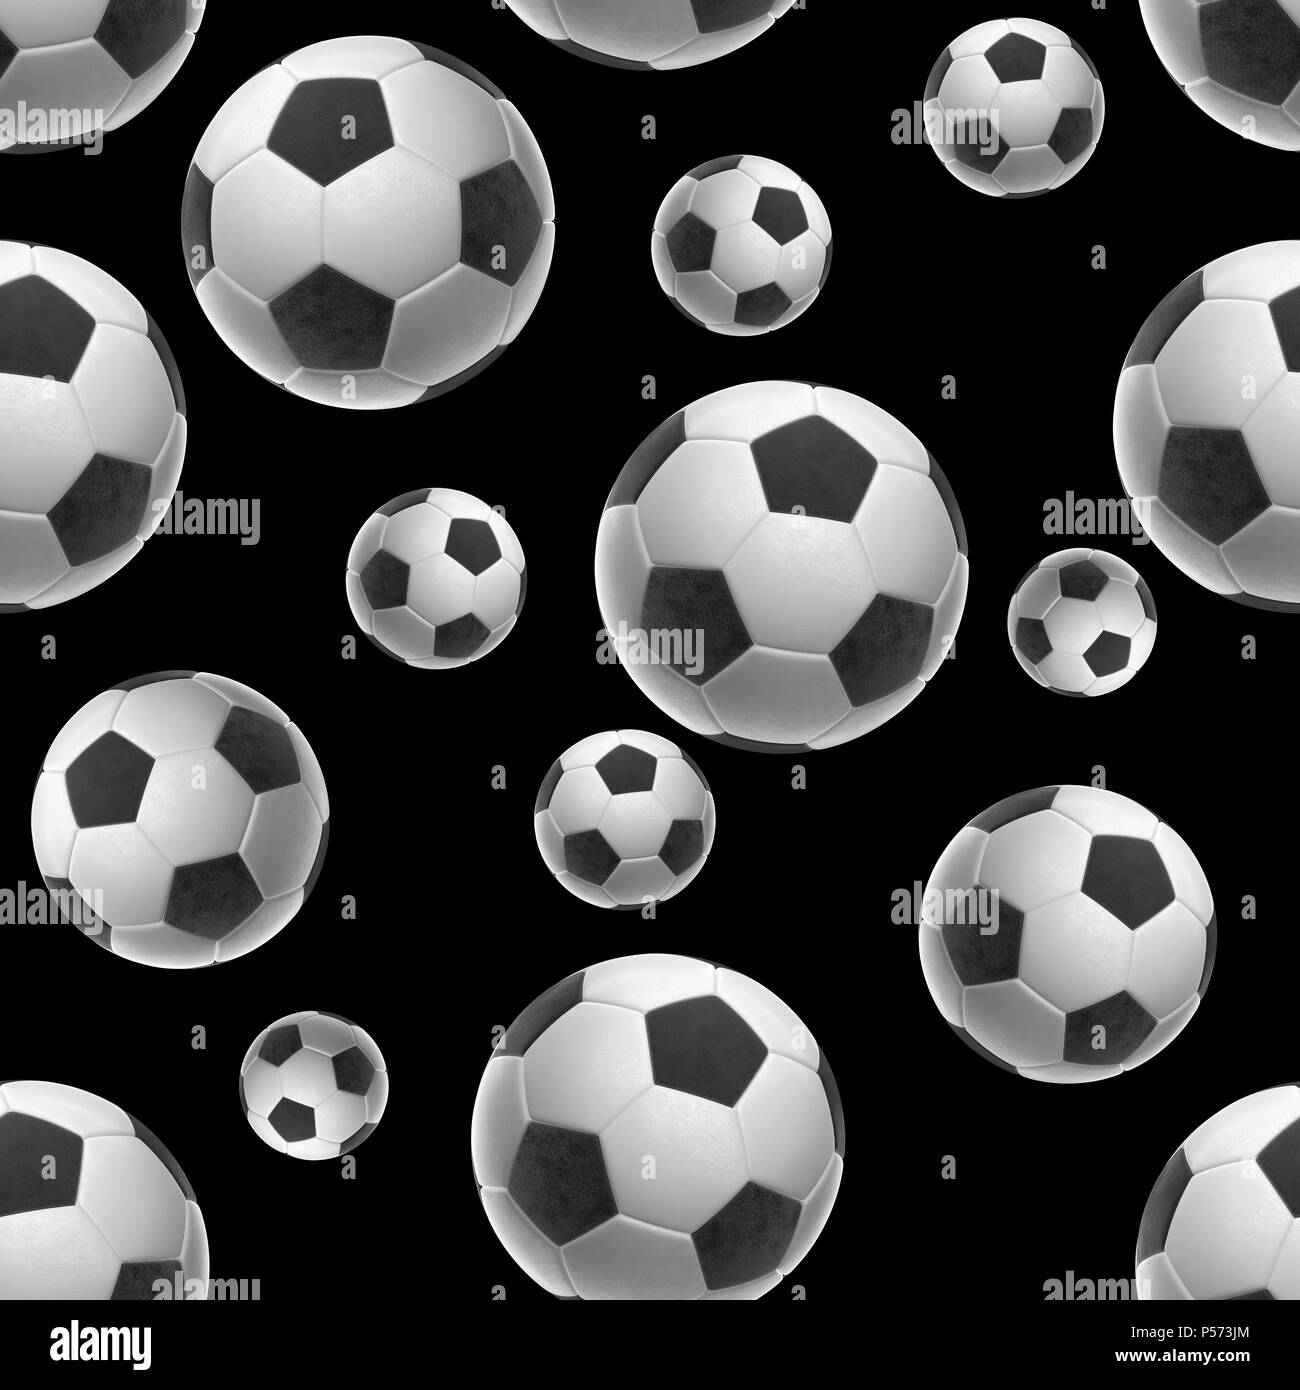 Soccer-balls isolated on black background seamless pattern 3d illustration Stock Photo